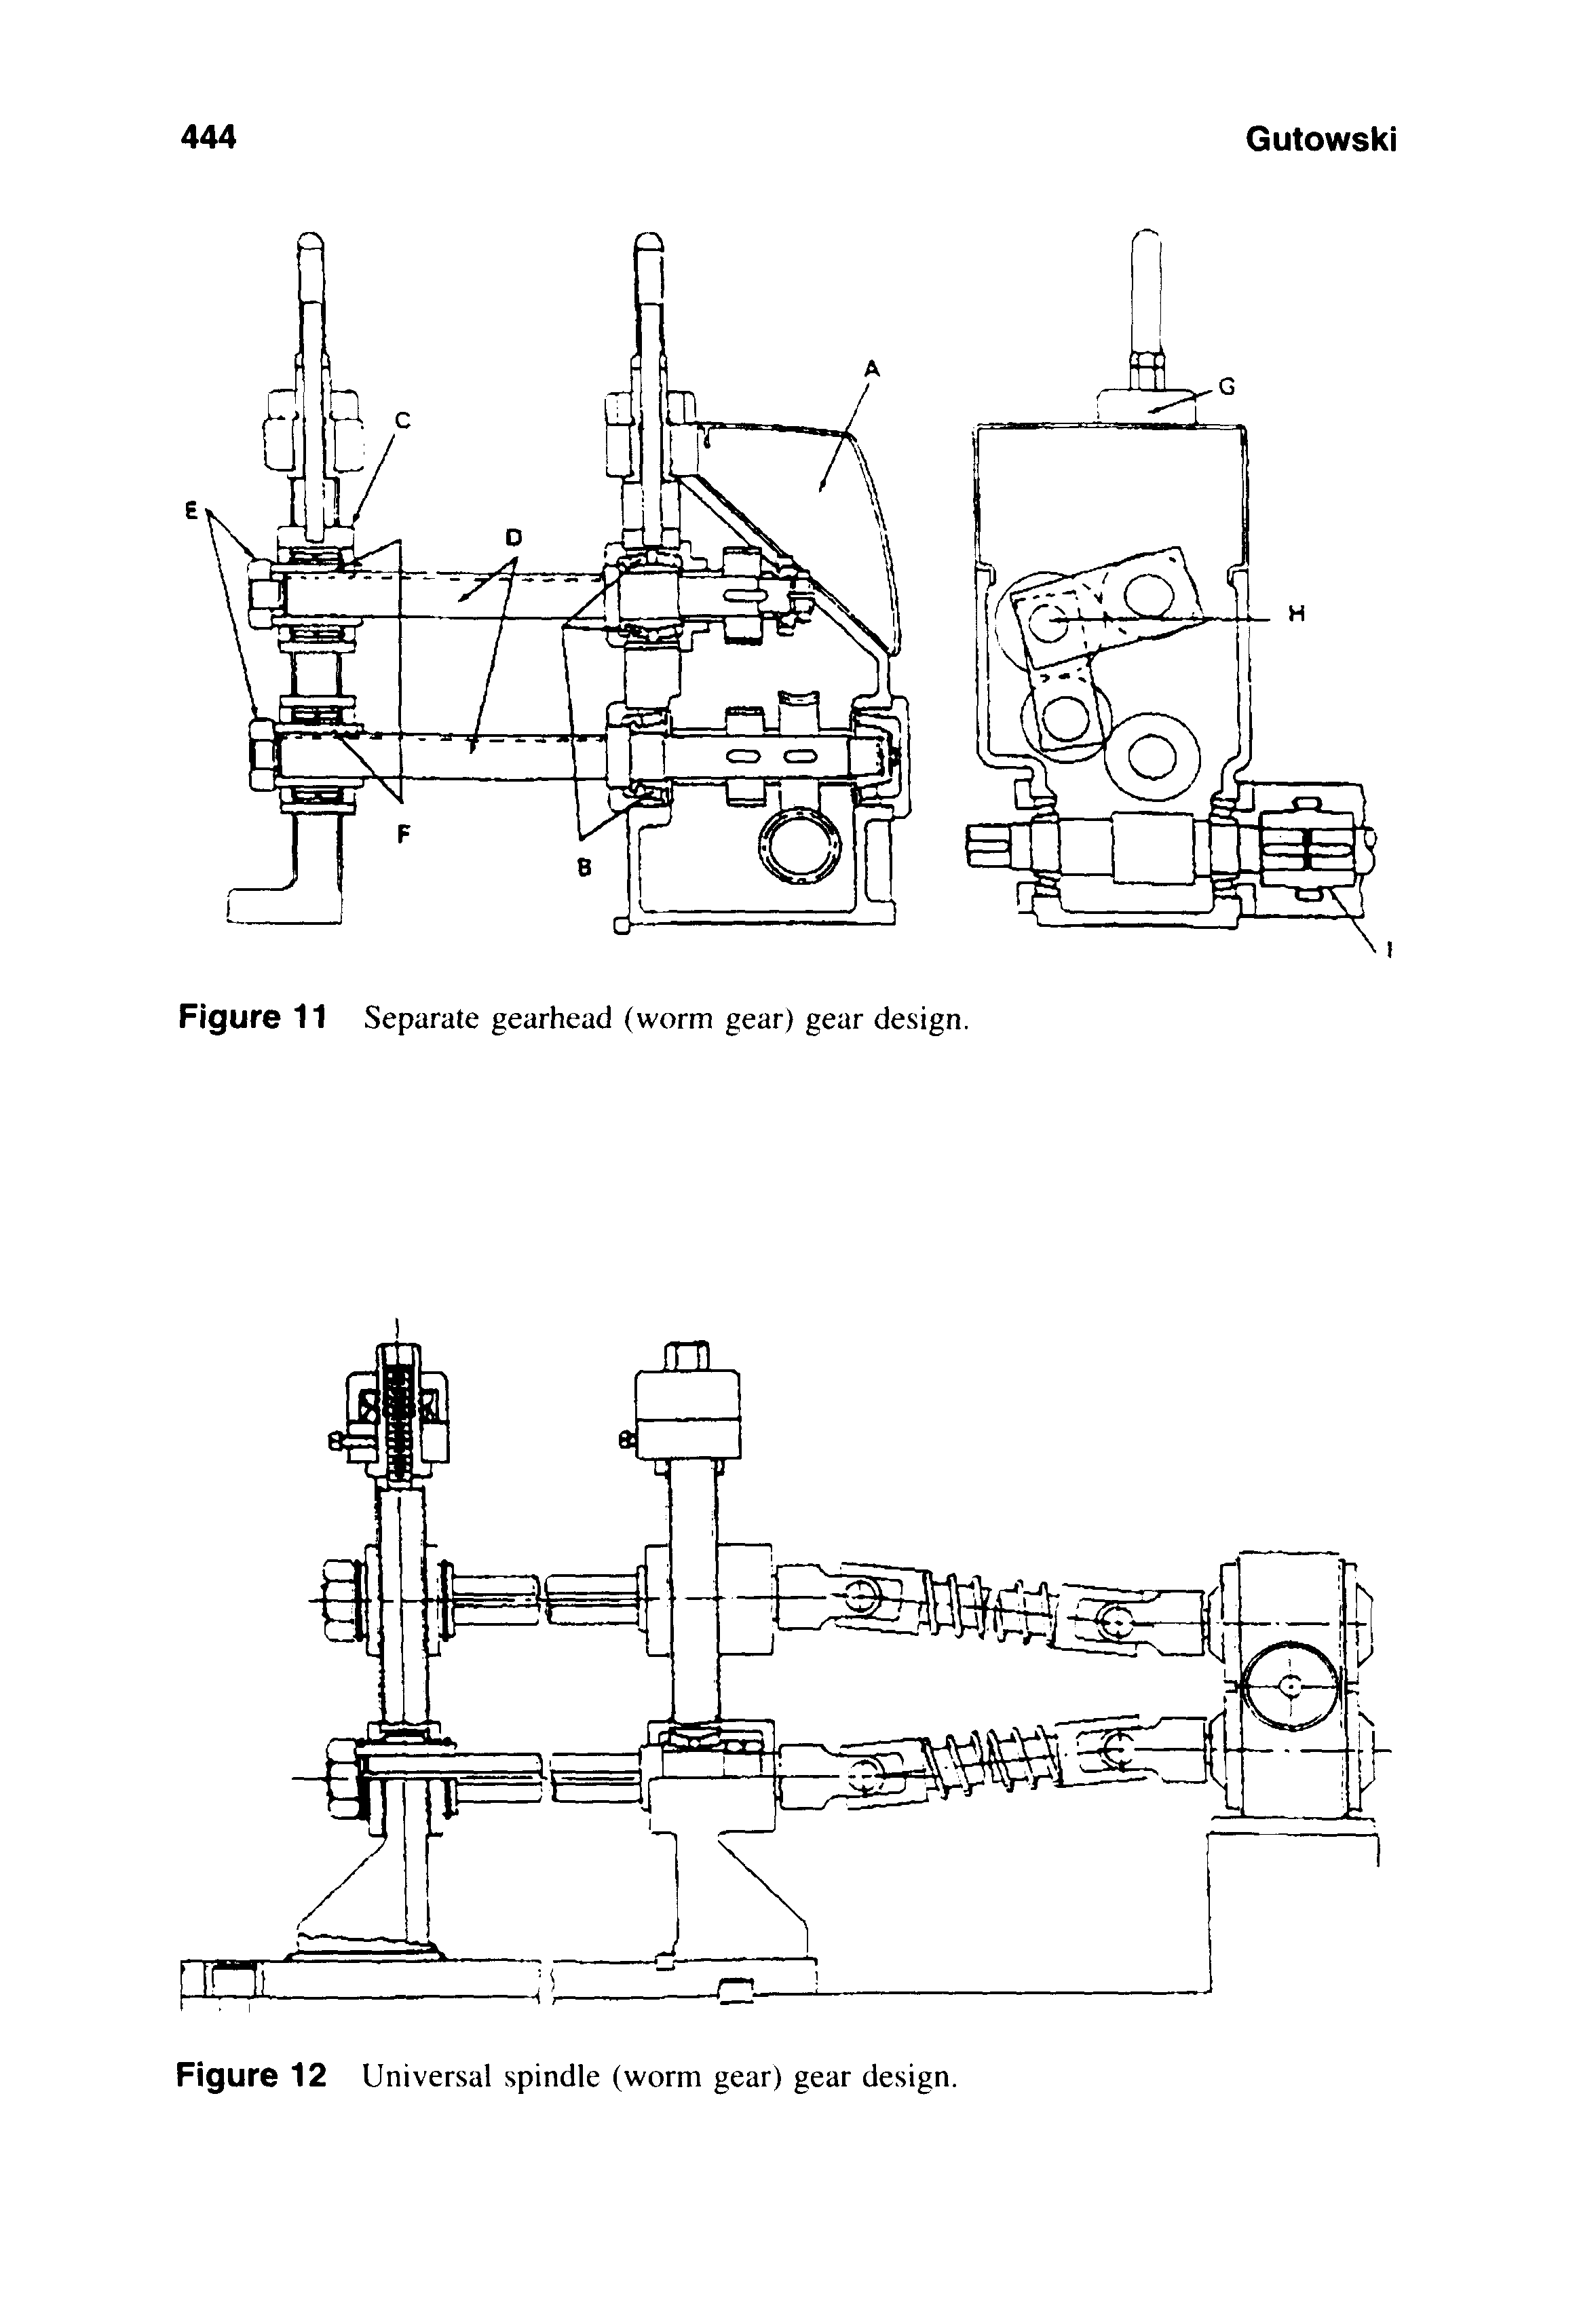 Figure 12 Universal spindle (worm gear) gear design.